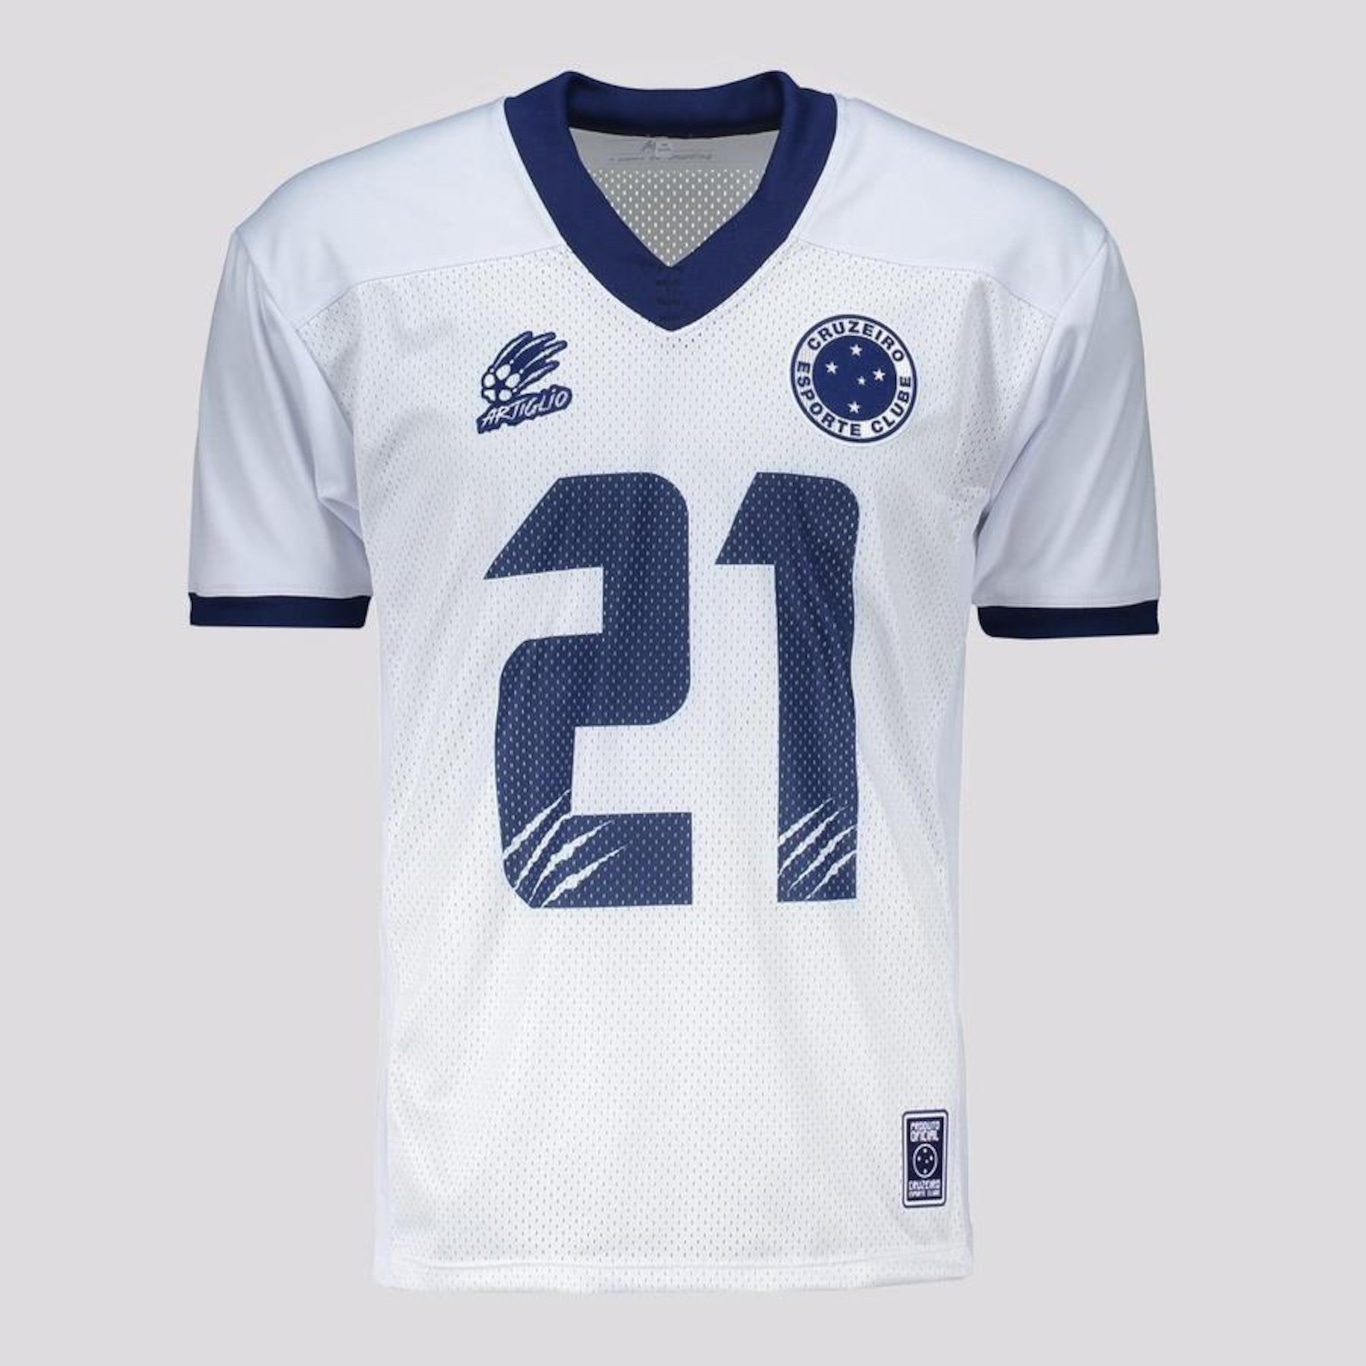 Camisa Artiglio Cruzeiro Futebol Americano I 2021 Feminina